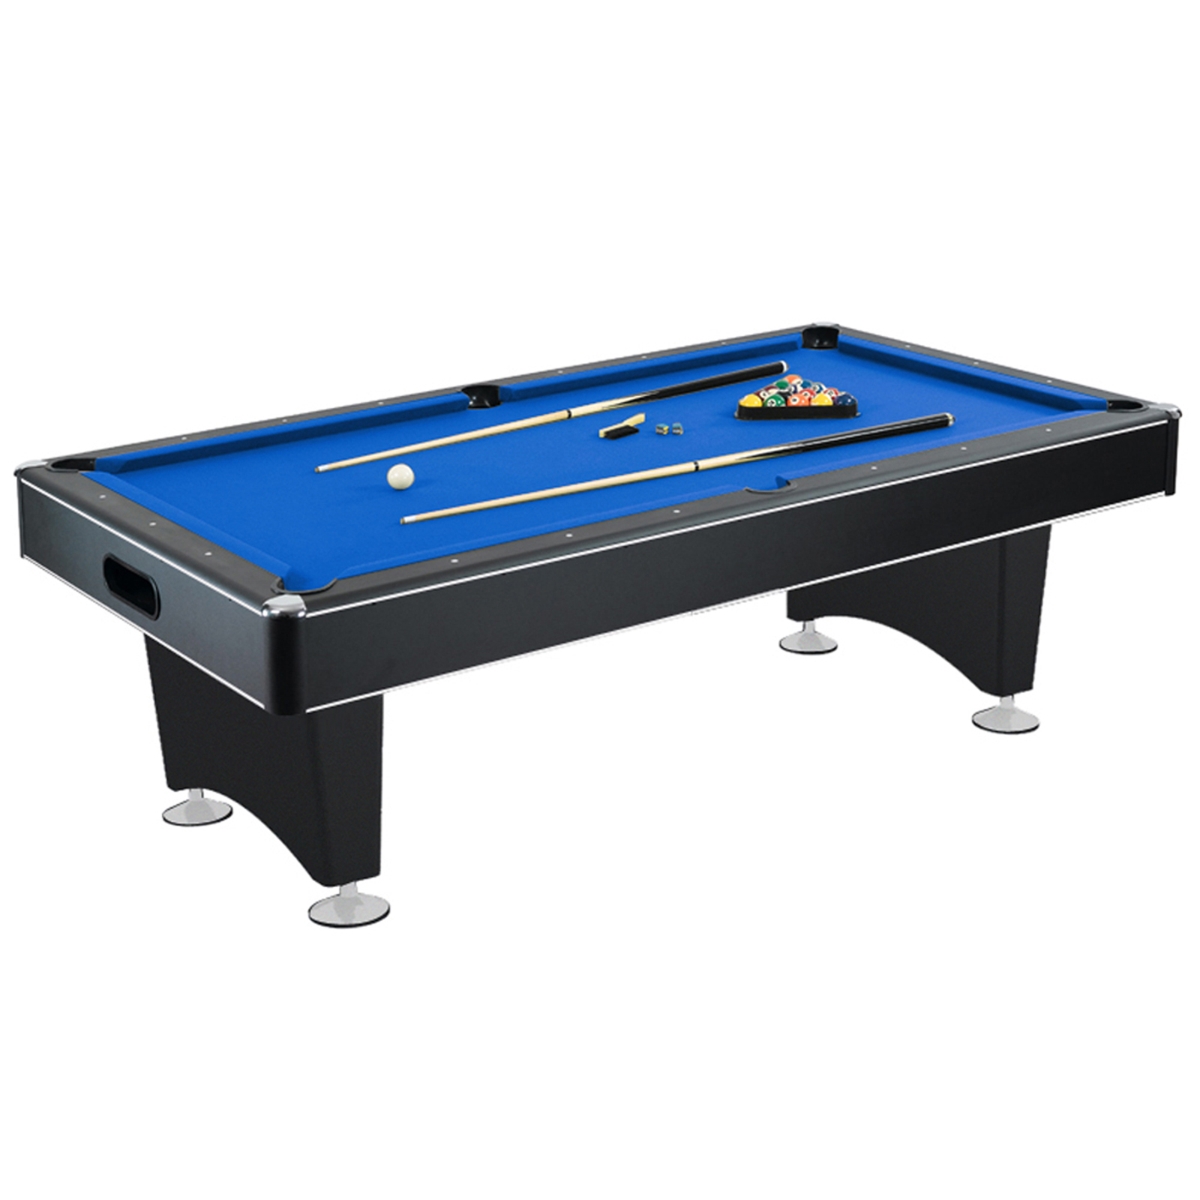 Ng2520pb 8 Ft. Hustler Pool Table, Blue